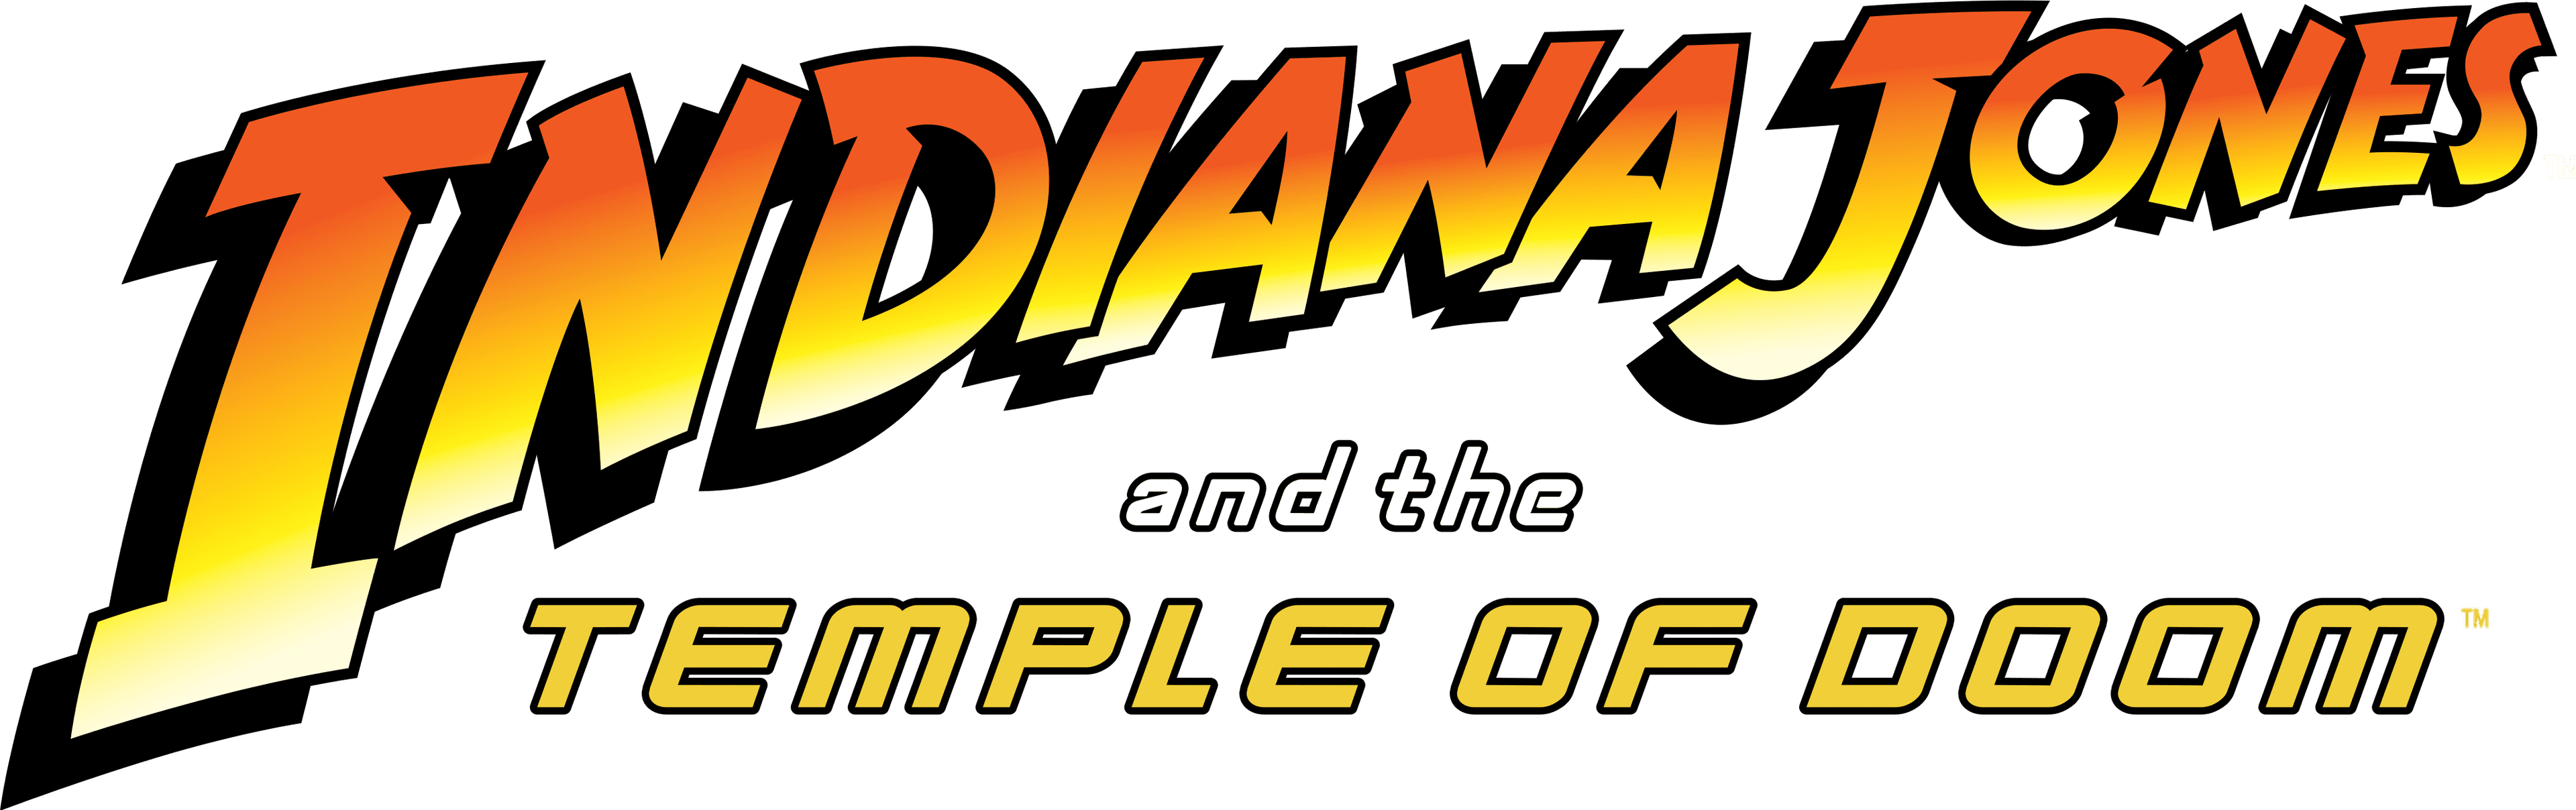 Indiana Jones and the Temple of Doom logo